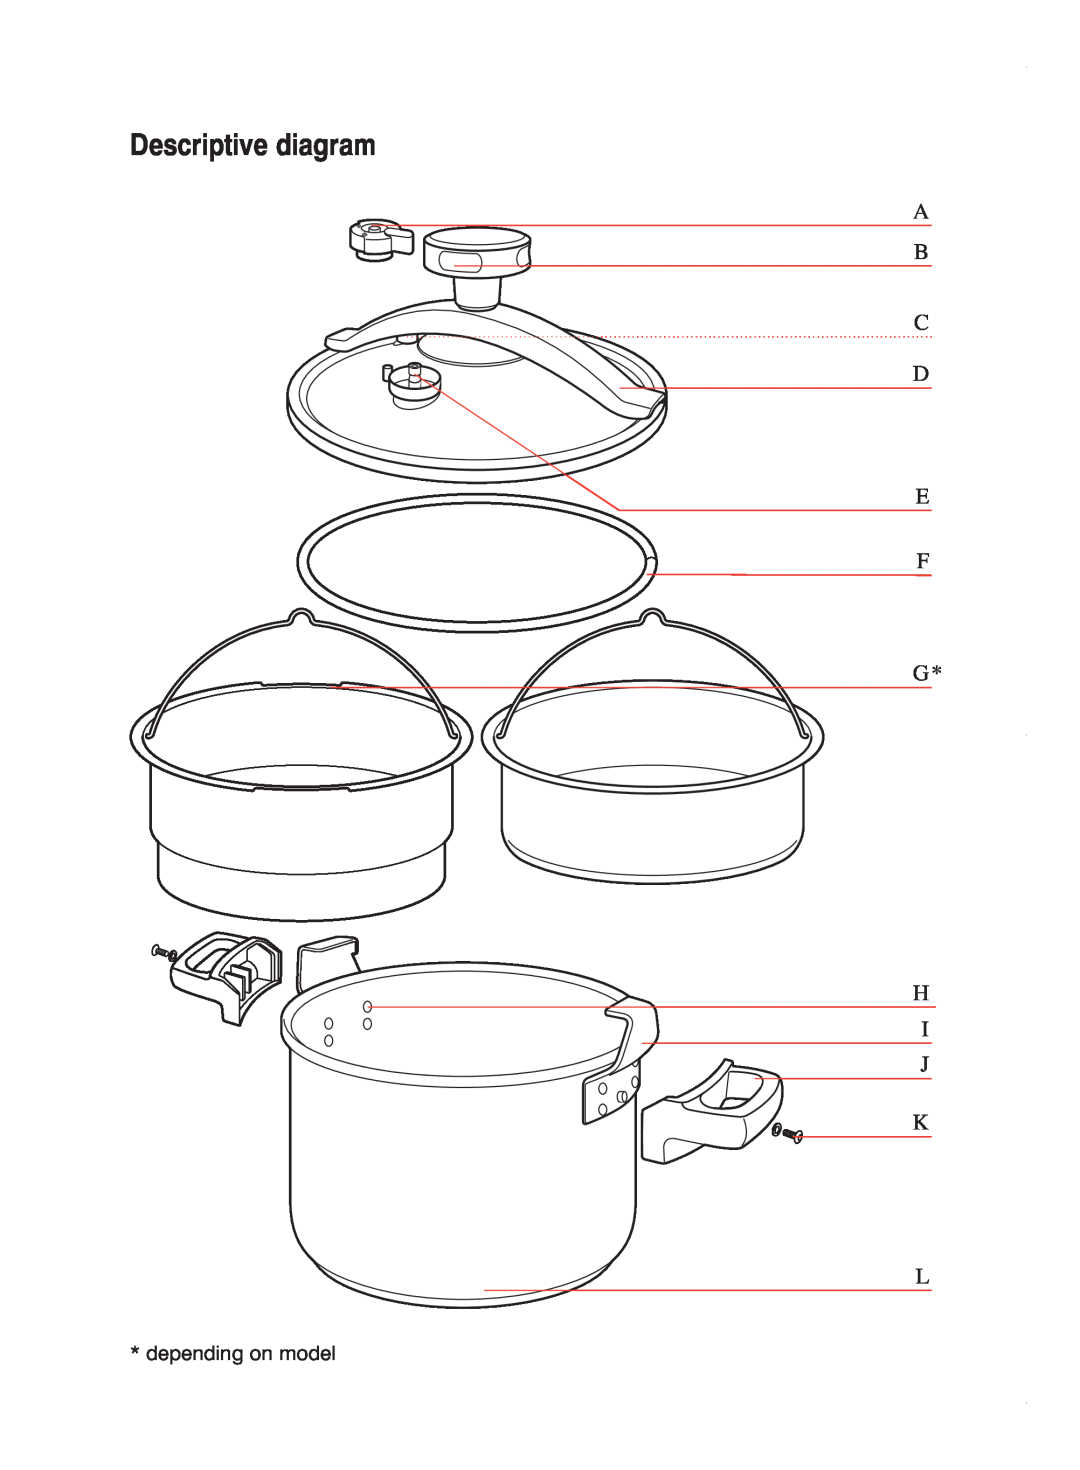 Groupe SEB USA - T-FAL Pressure Cooker user manual Descriptive diagram, A B C D E F G H I J K L, depending on model 